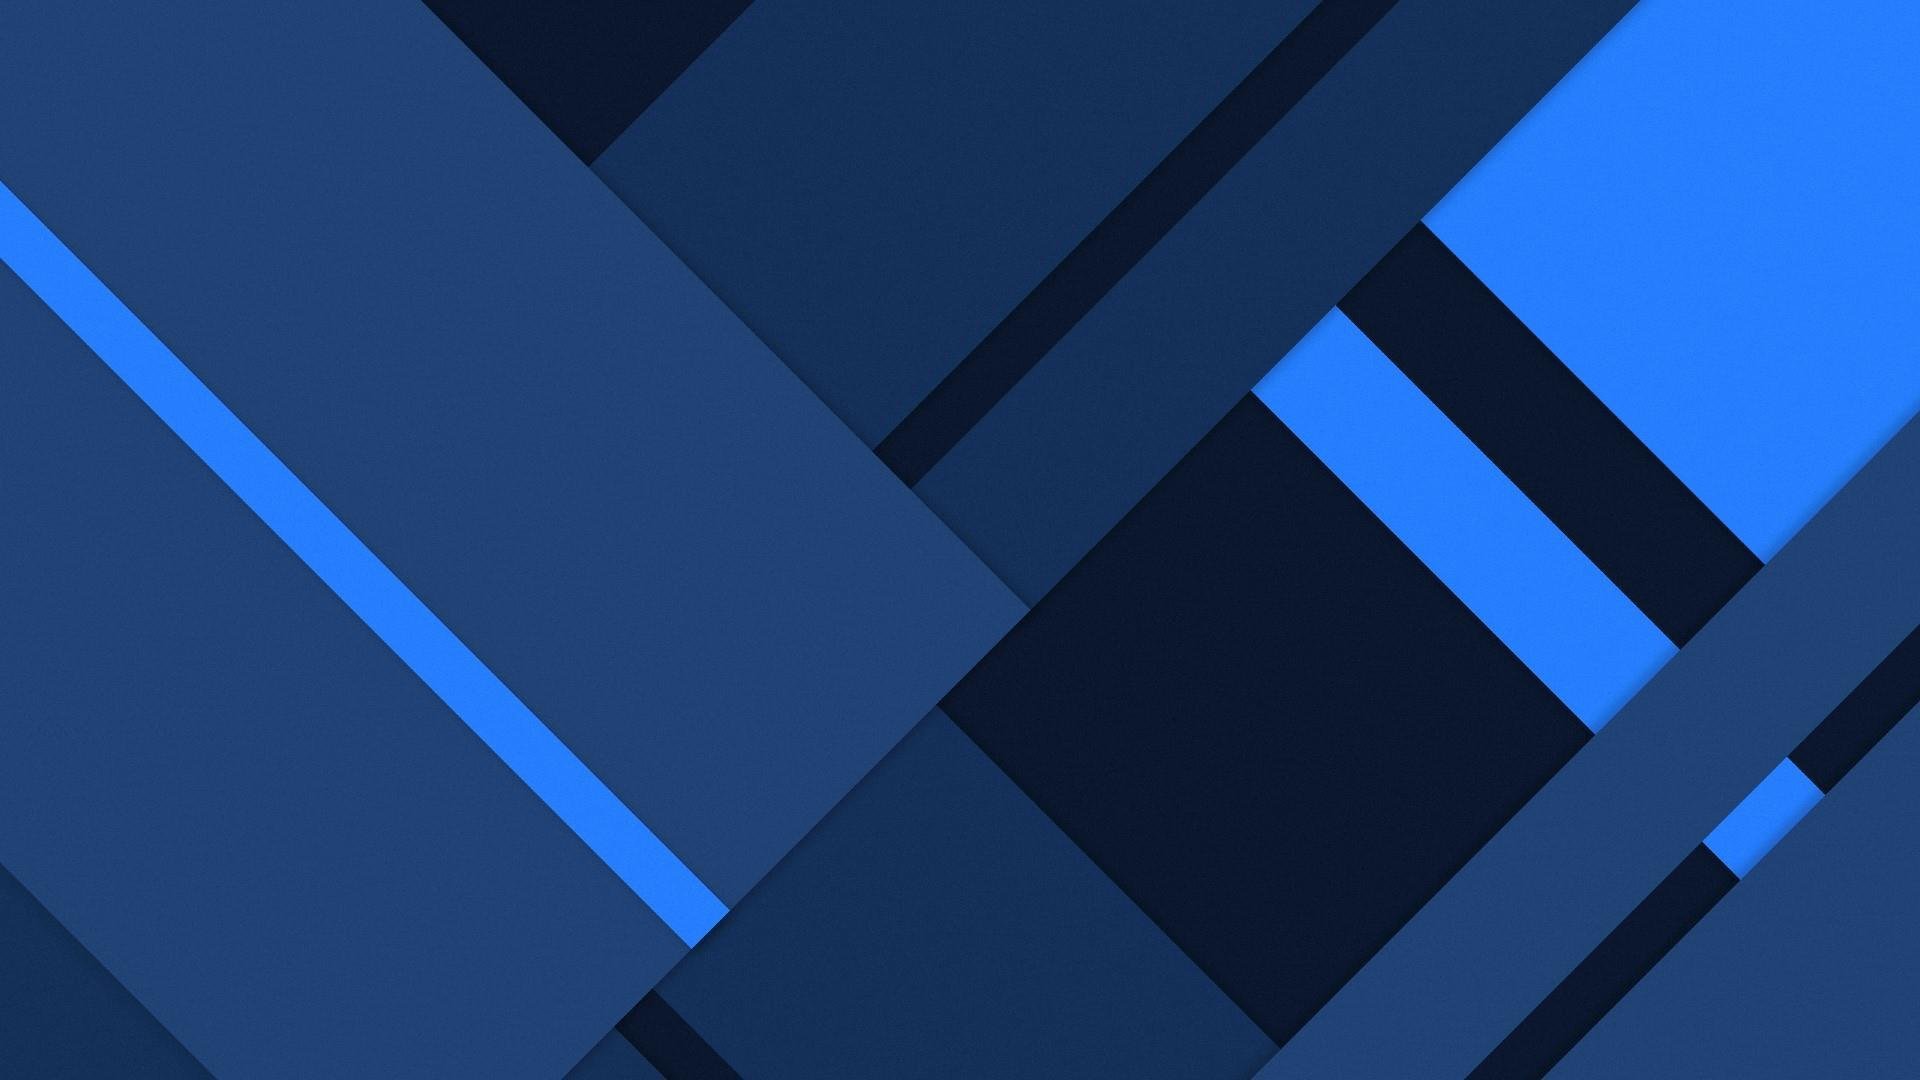 Синий минимализм. Синие обои. Абстракция прямоугольники. Синий фон с полосками.